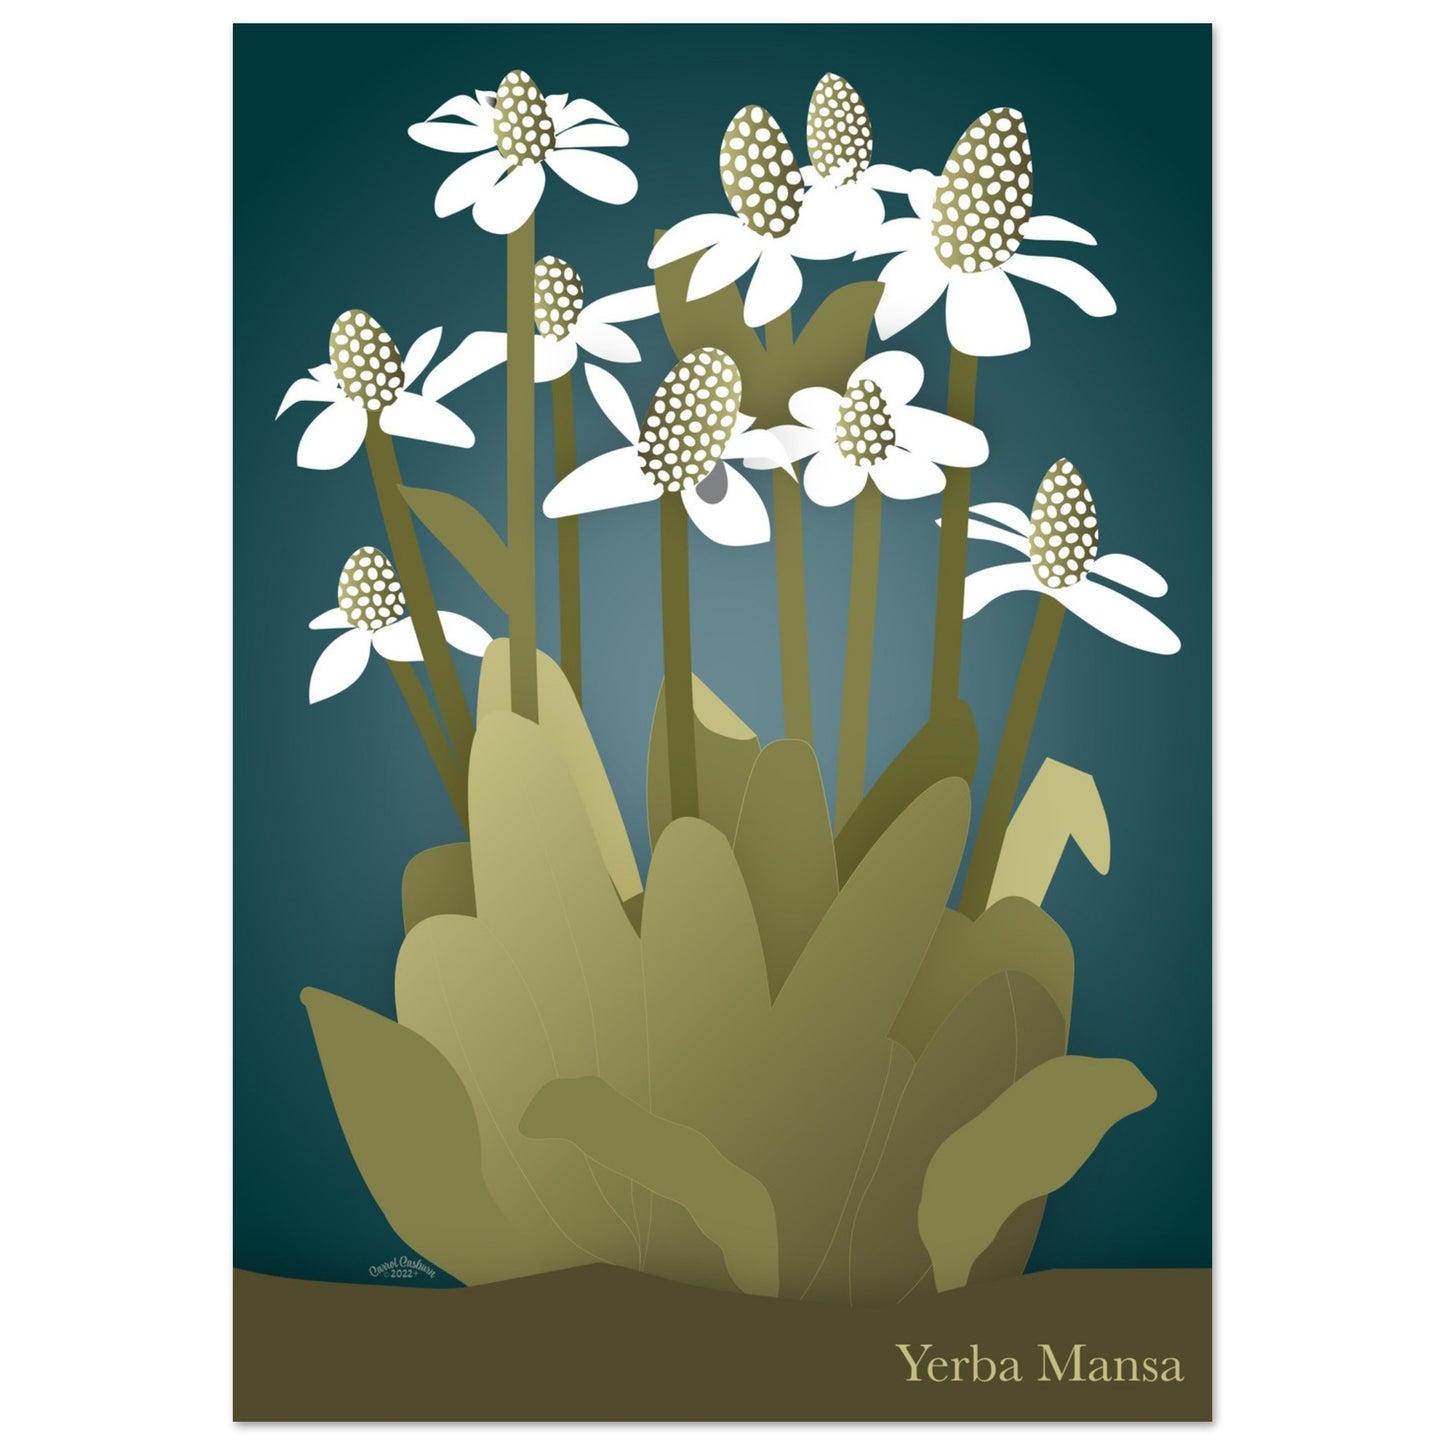 Enchanting Yerba Mansa Art Print on FOAM PVC BOARD - Green Pear House and Home